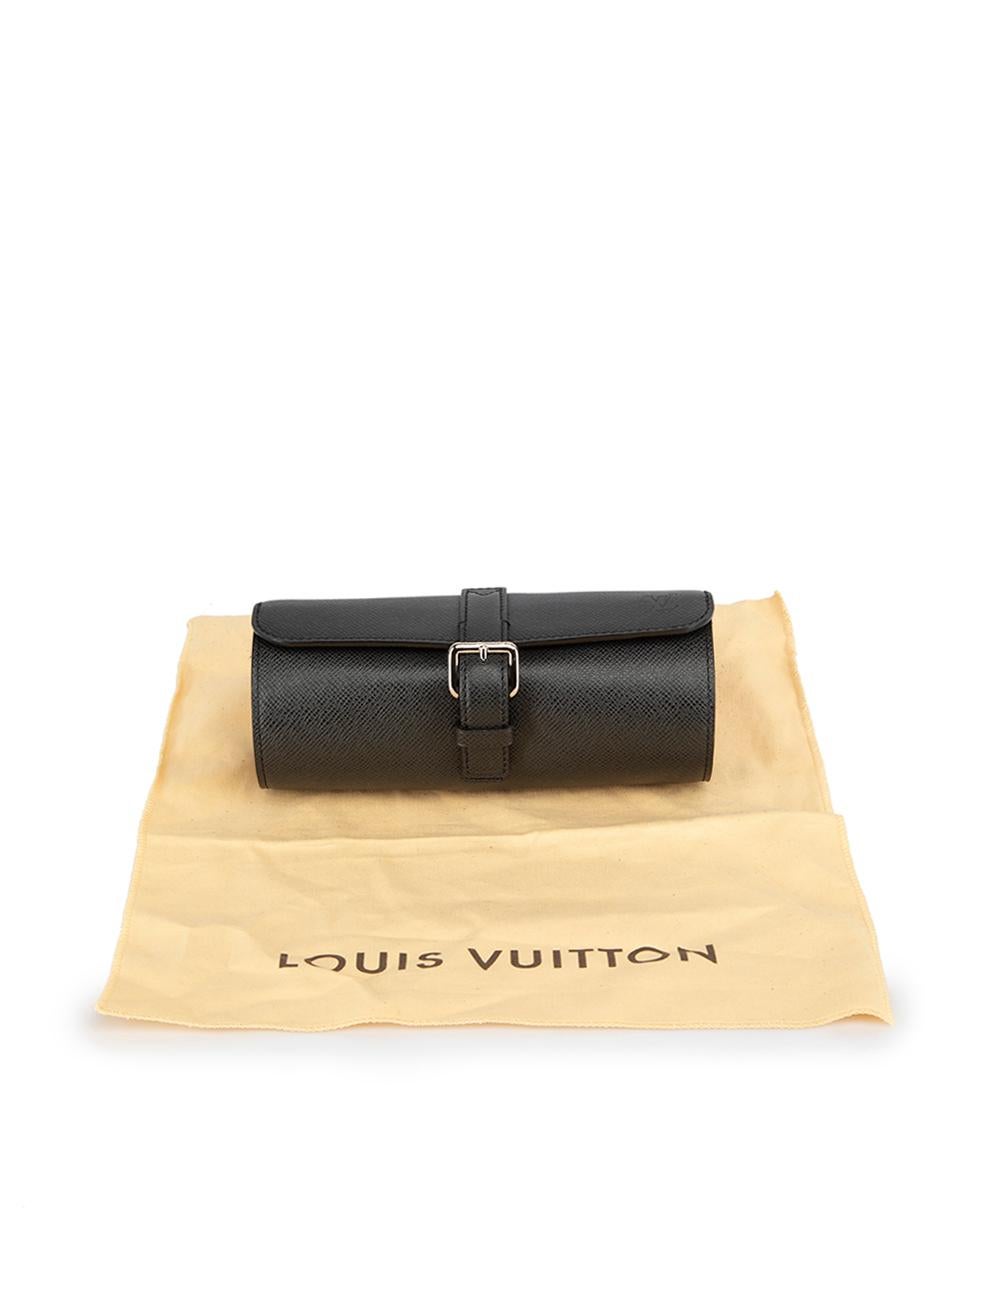 Louis Vuitton Black Leather Watch Case For Sale 2